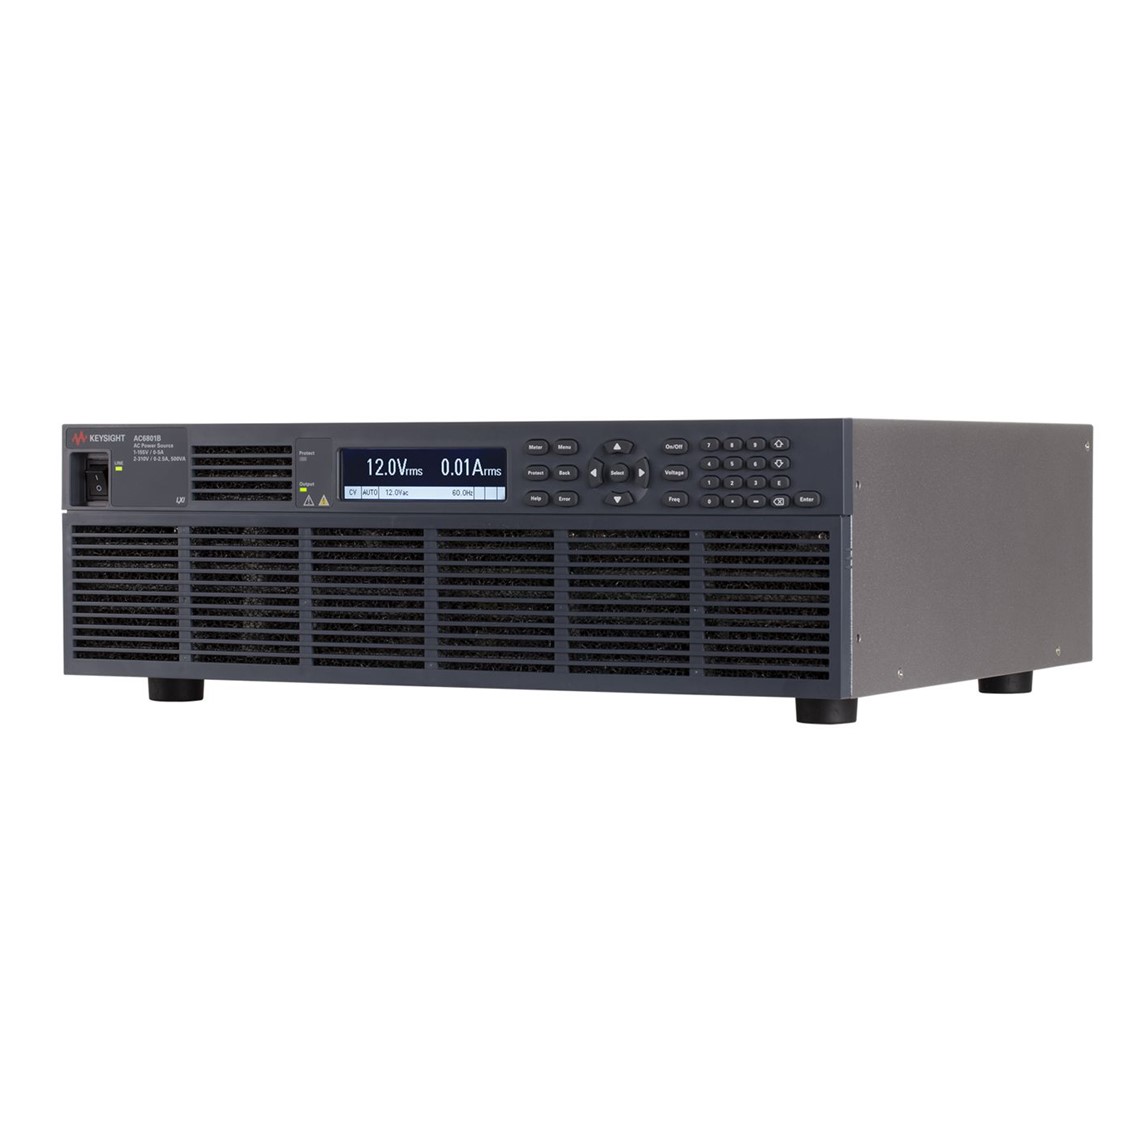 [ KEYSIGHT ] AC6802B  AC전원공급기 310V/5A/1000VA AC Power Supply